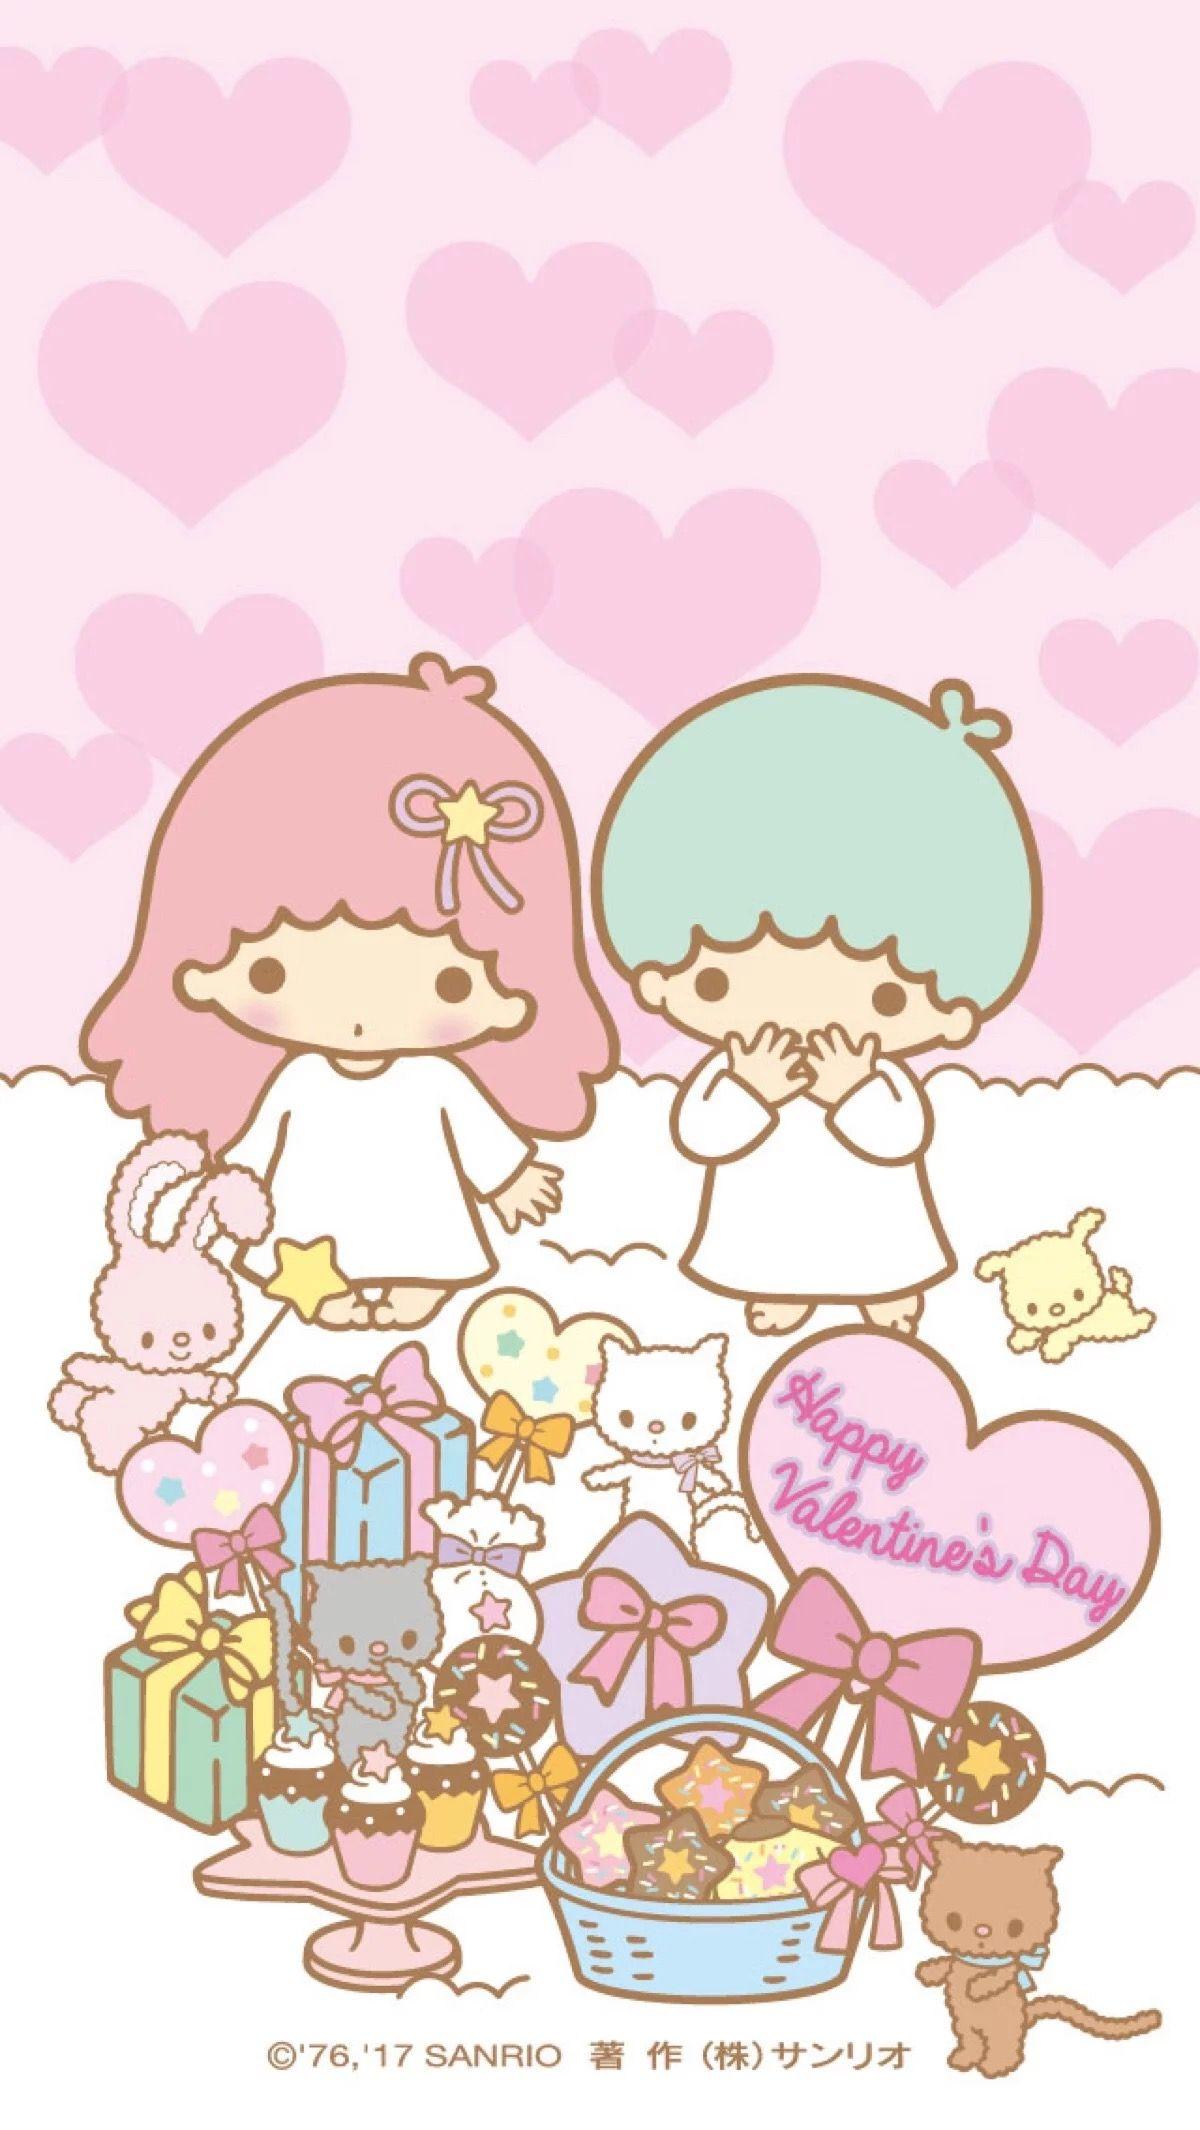 Little Twin Stars' Happy Valentine's Day, as courtesy of Sanrio